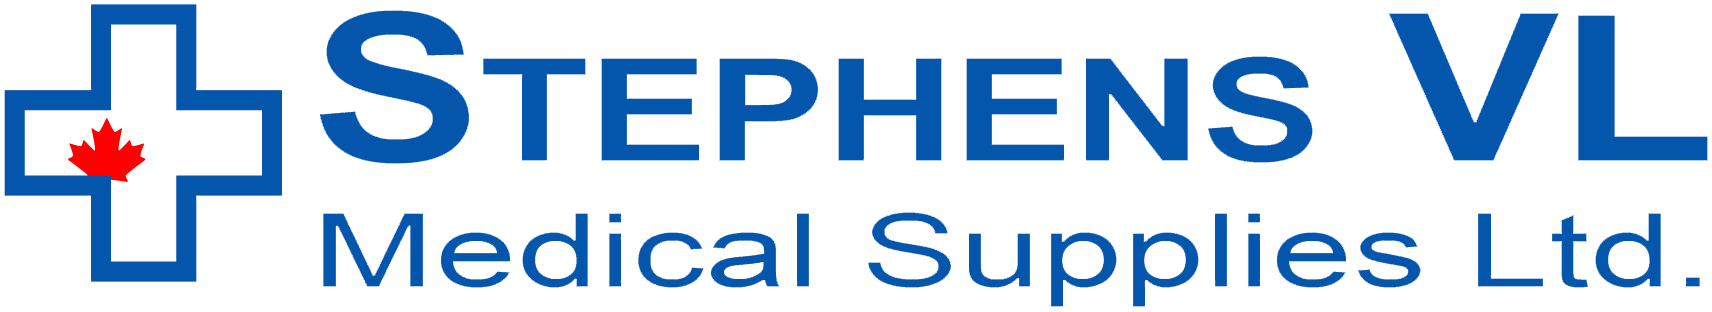 Stephens VL Medical Supplies Ltd.